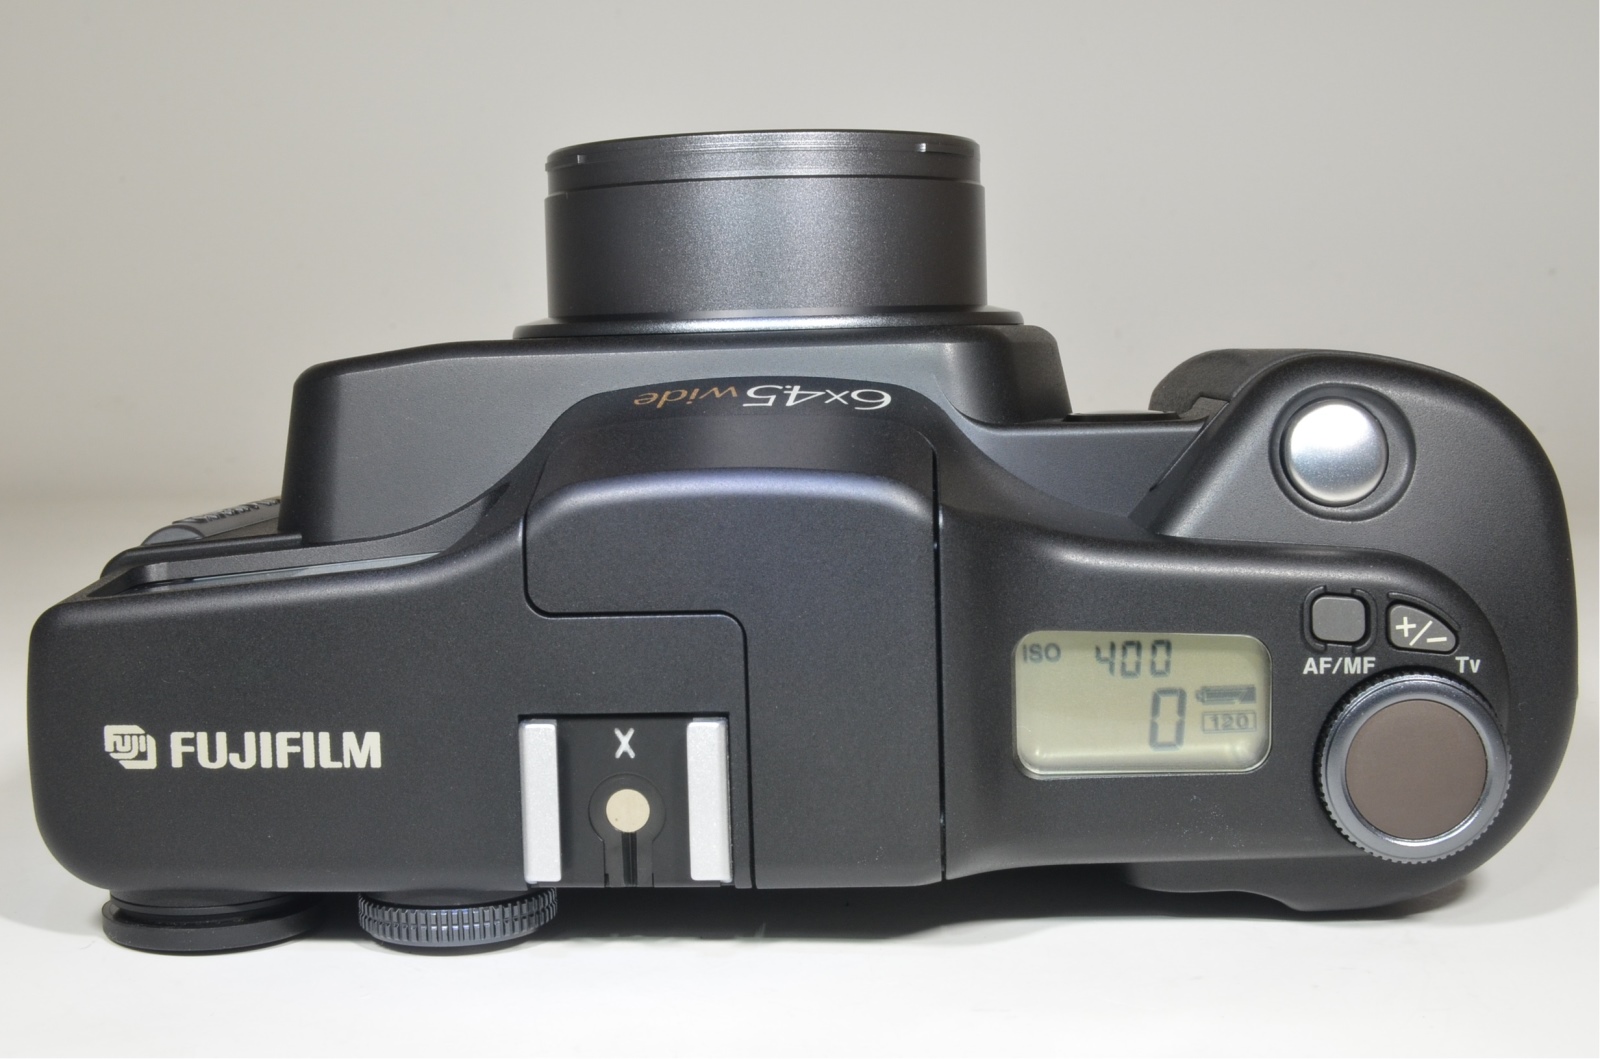 fujifilm ga645wi wide professional 45mm f4